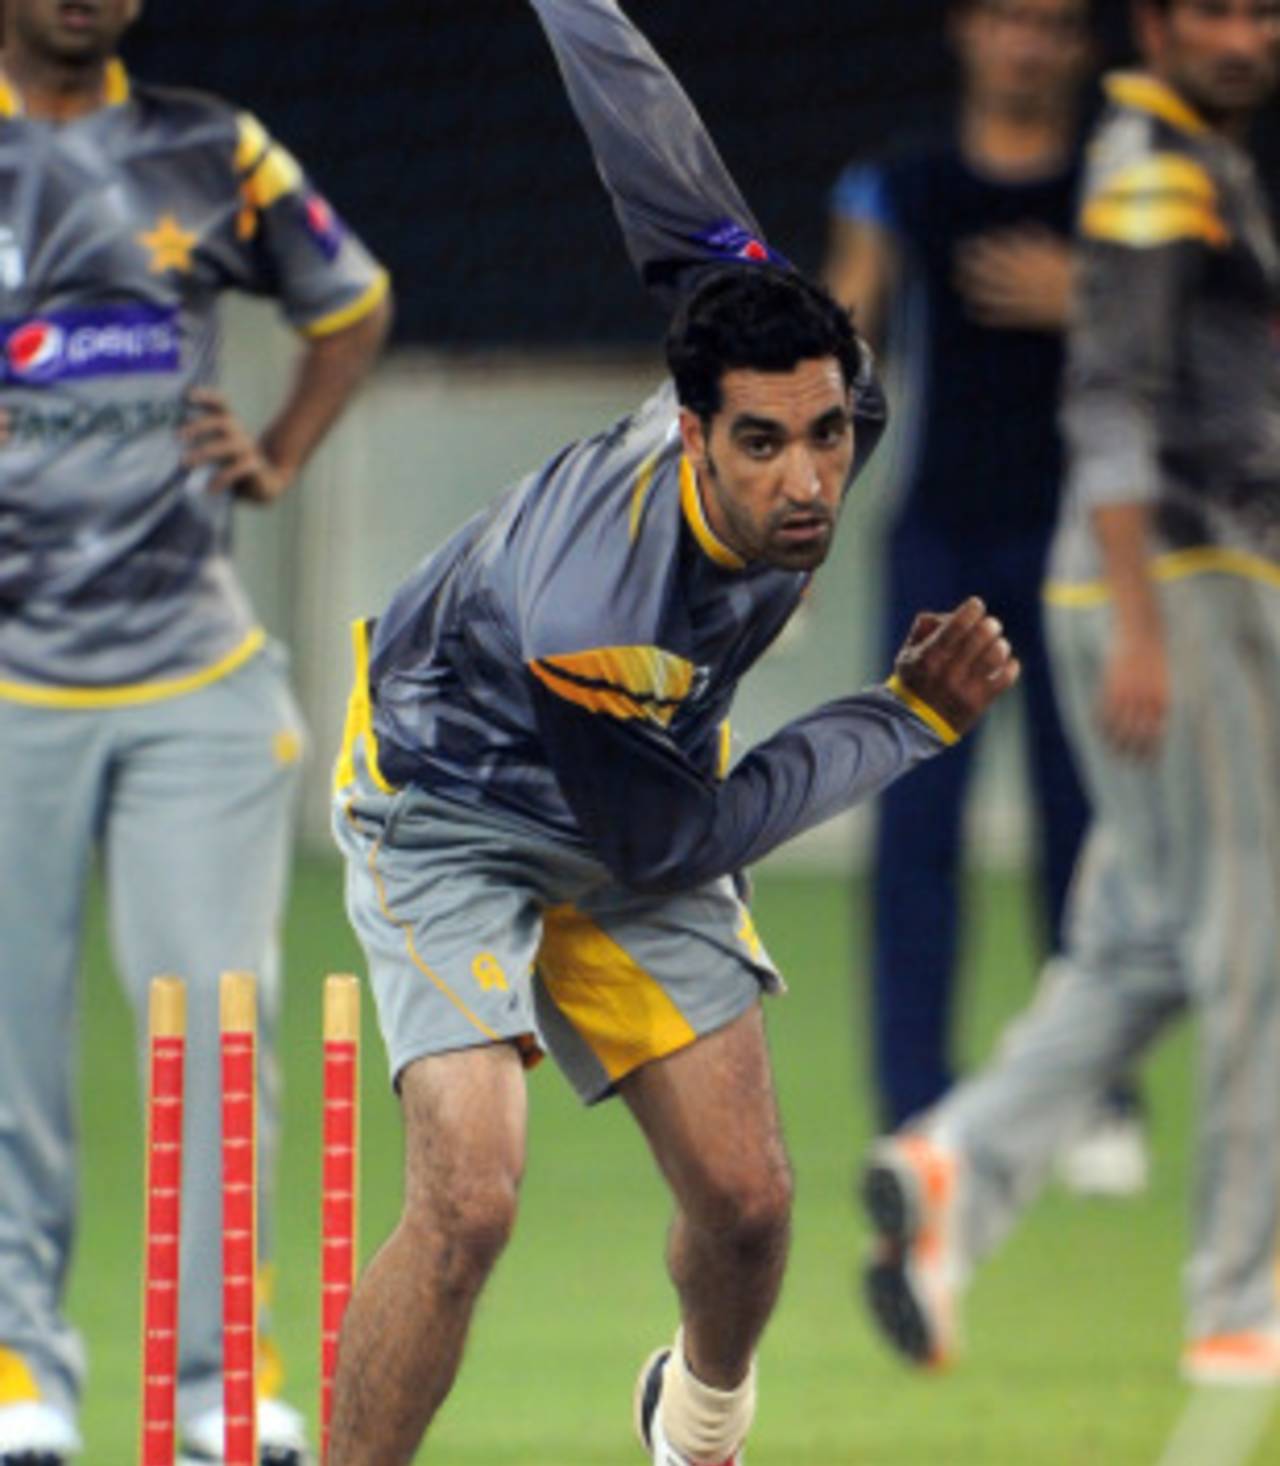 Mohammad Hafeez has backed his premier fast bowler, Umar Gul, to put in a big performance&nbsp;&nbsp;&bull;&nbsp;&nbsp;AFP